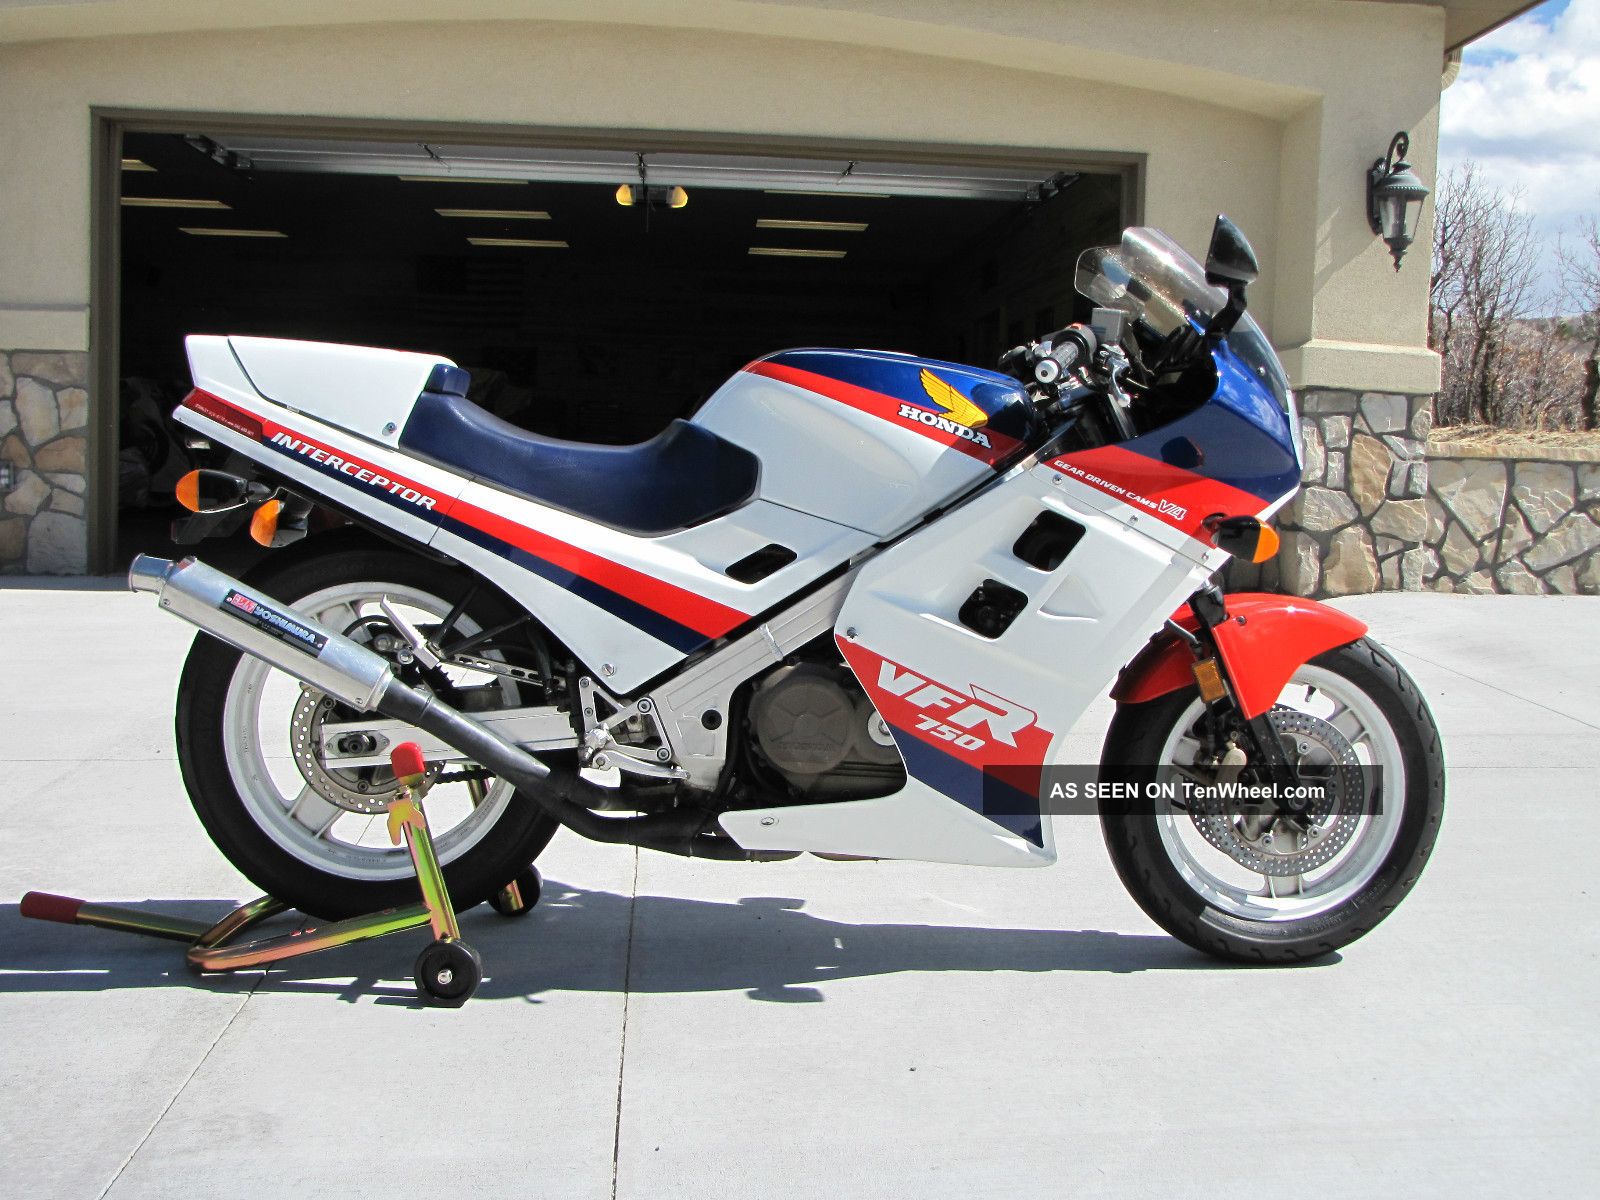 1986 750Vfr honda interceptor mototcycle #2